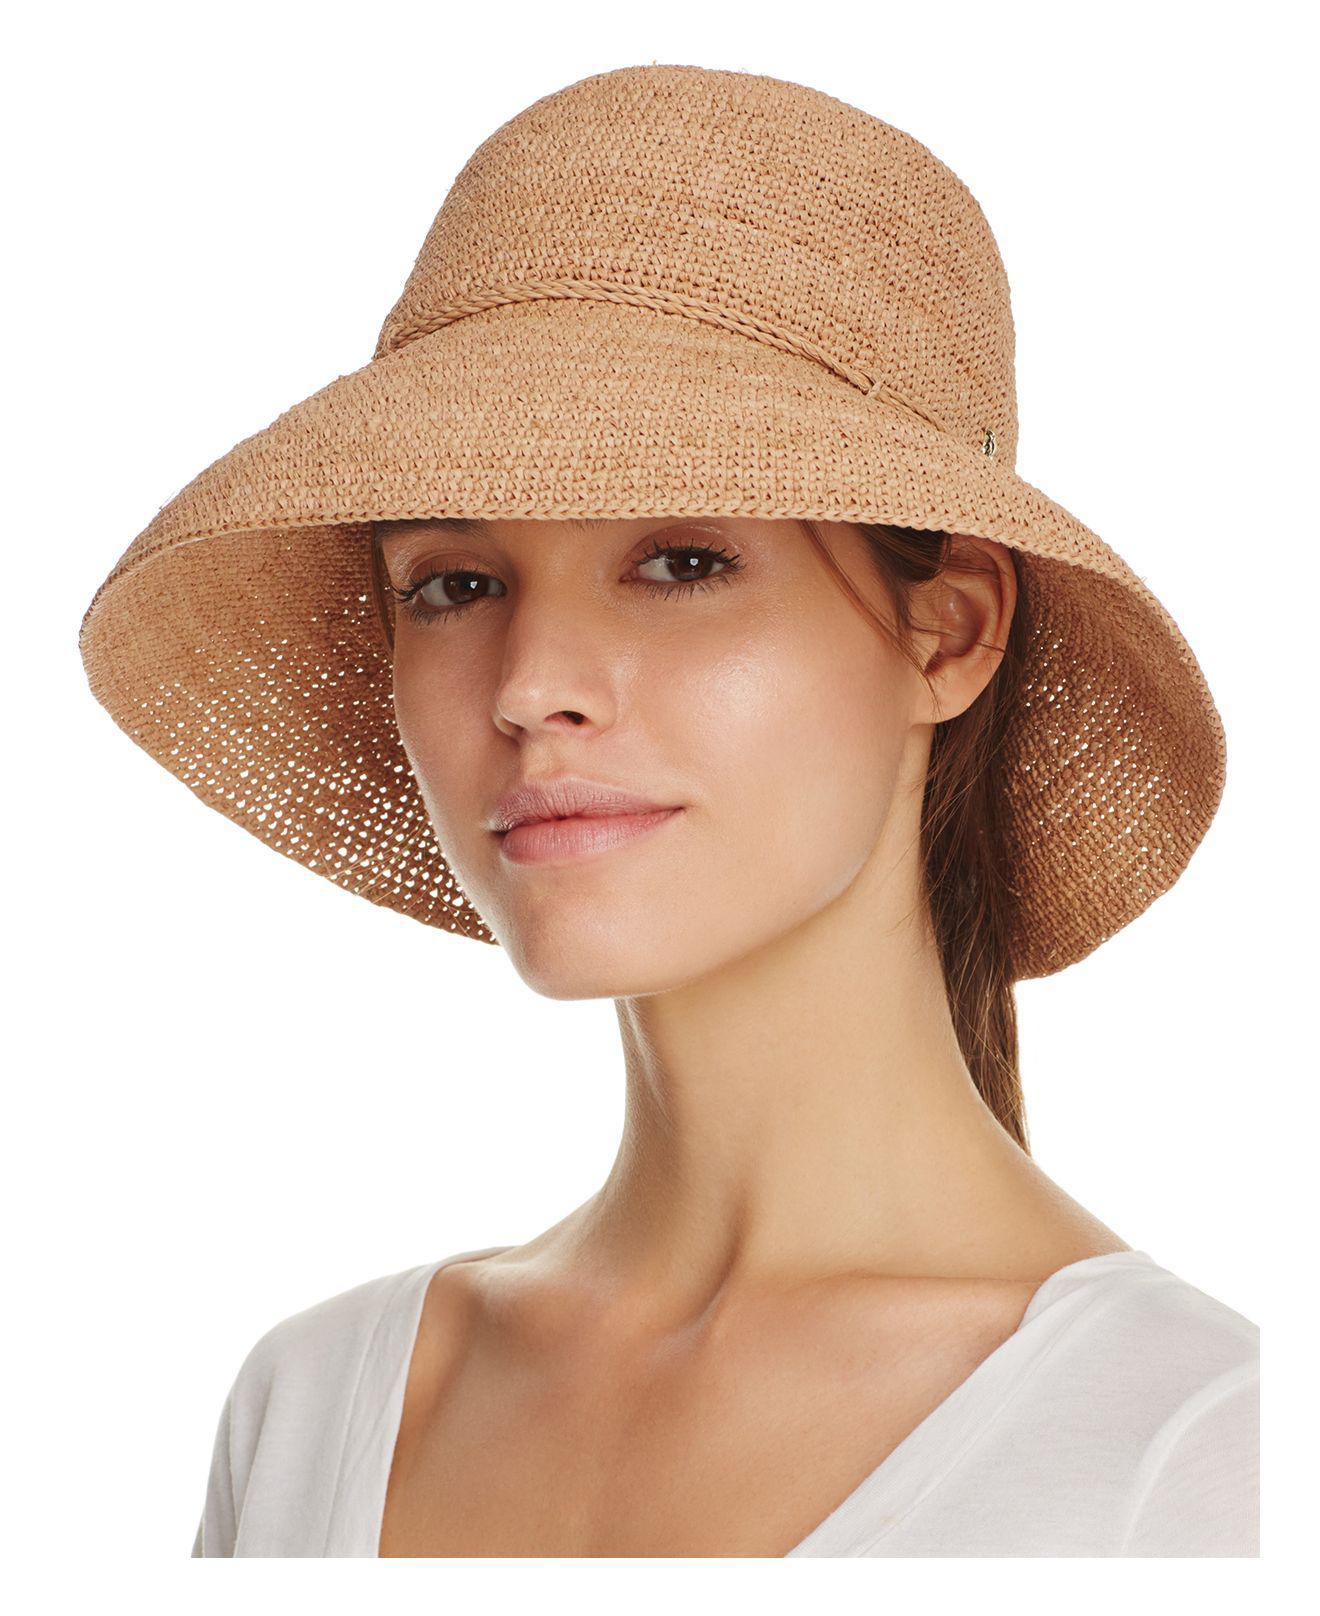 Lyst - Helen kaminski Provence 10 Hat
